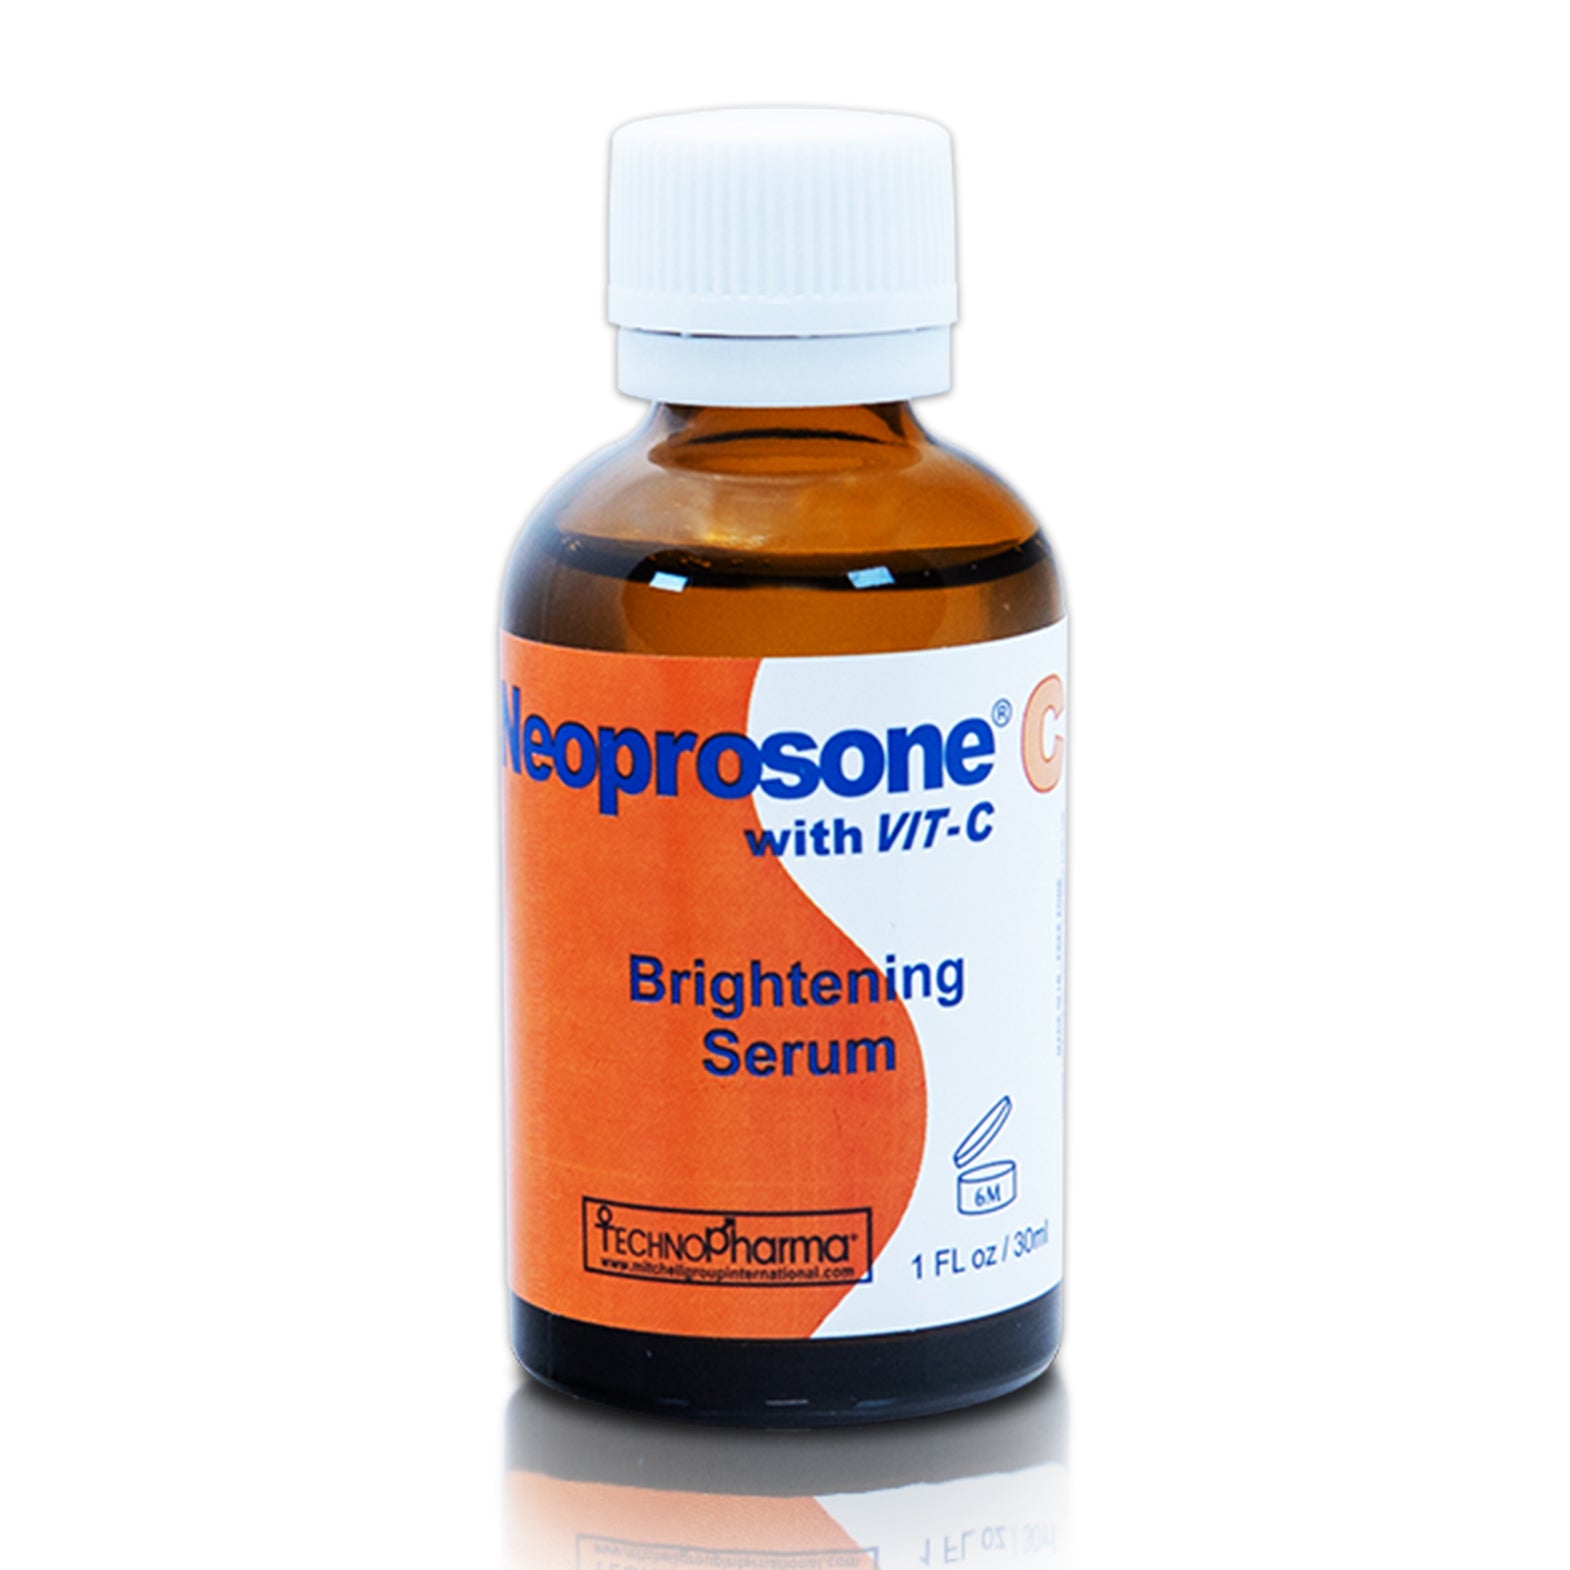 Neoprosone Brightening Serum With Vitamin C (Unboxed)